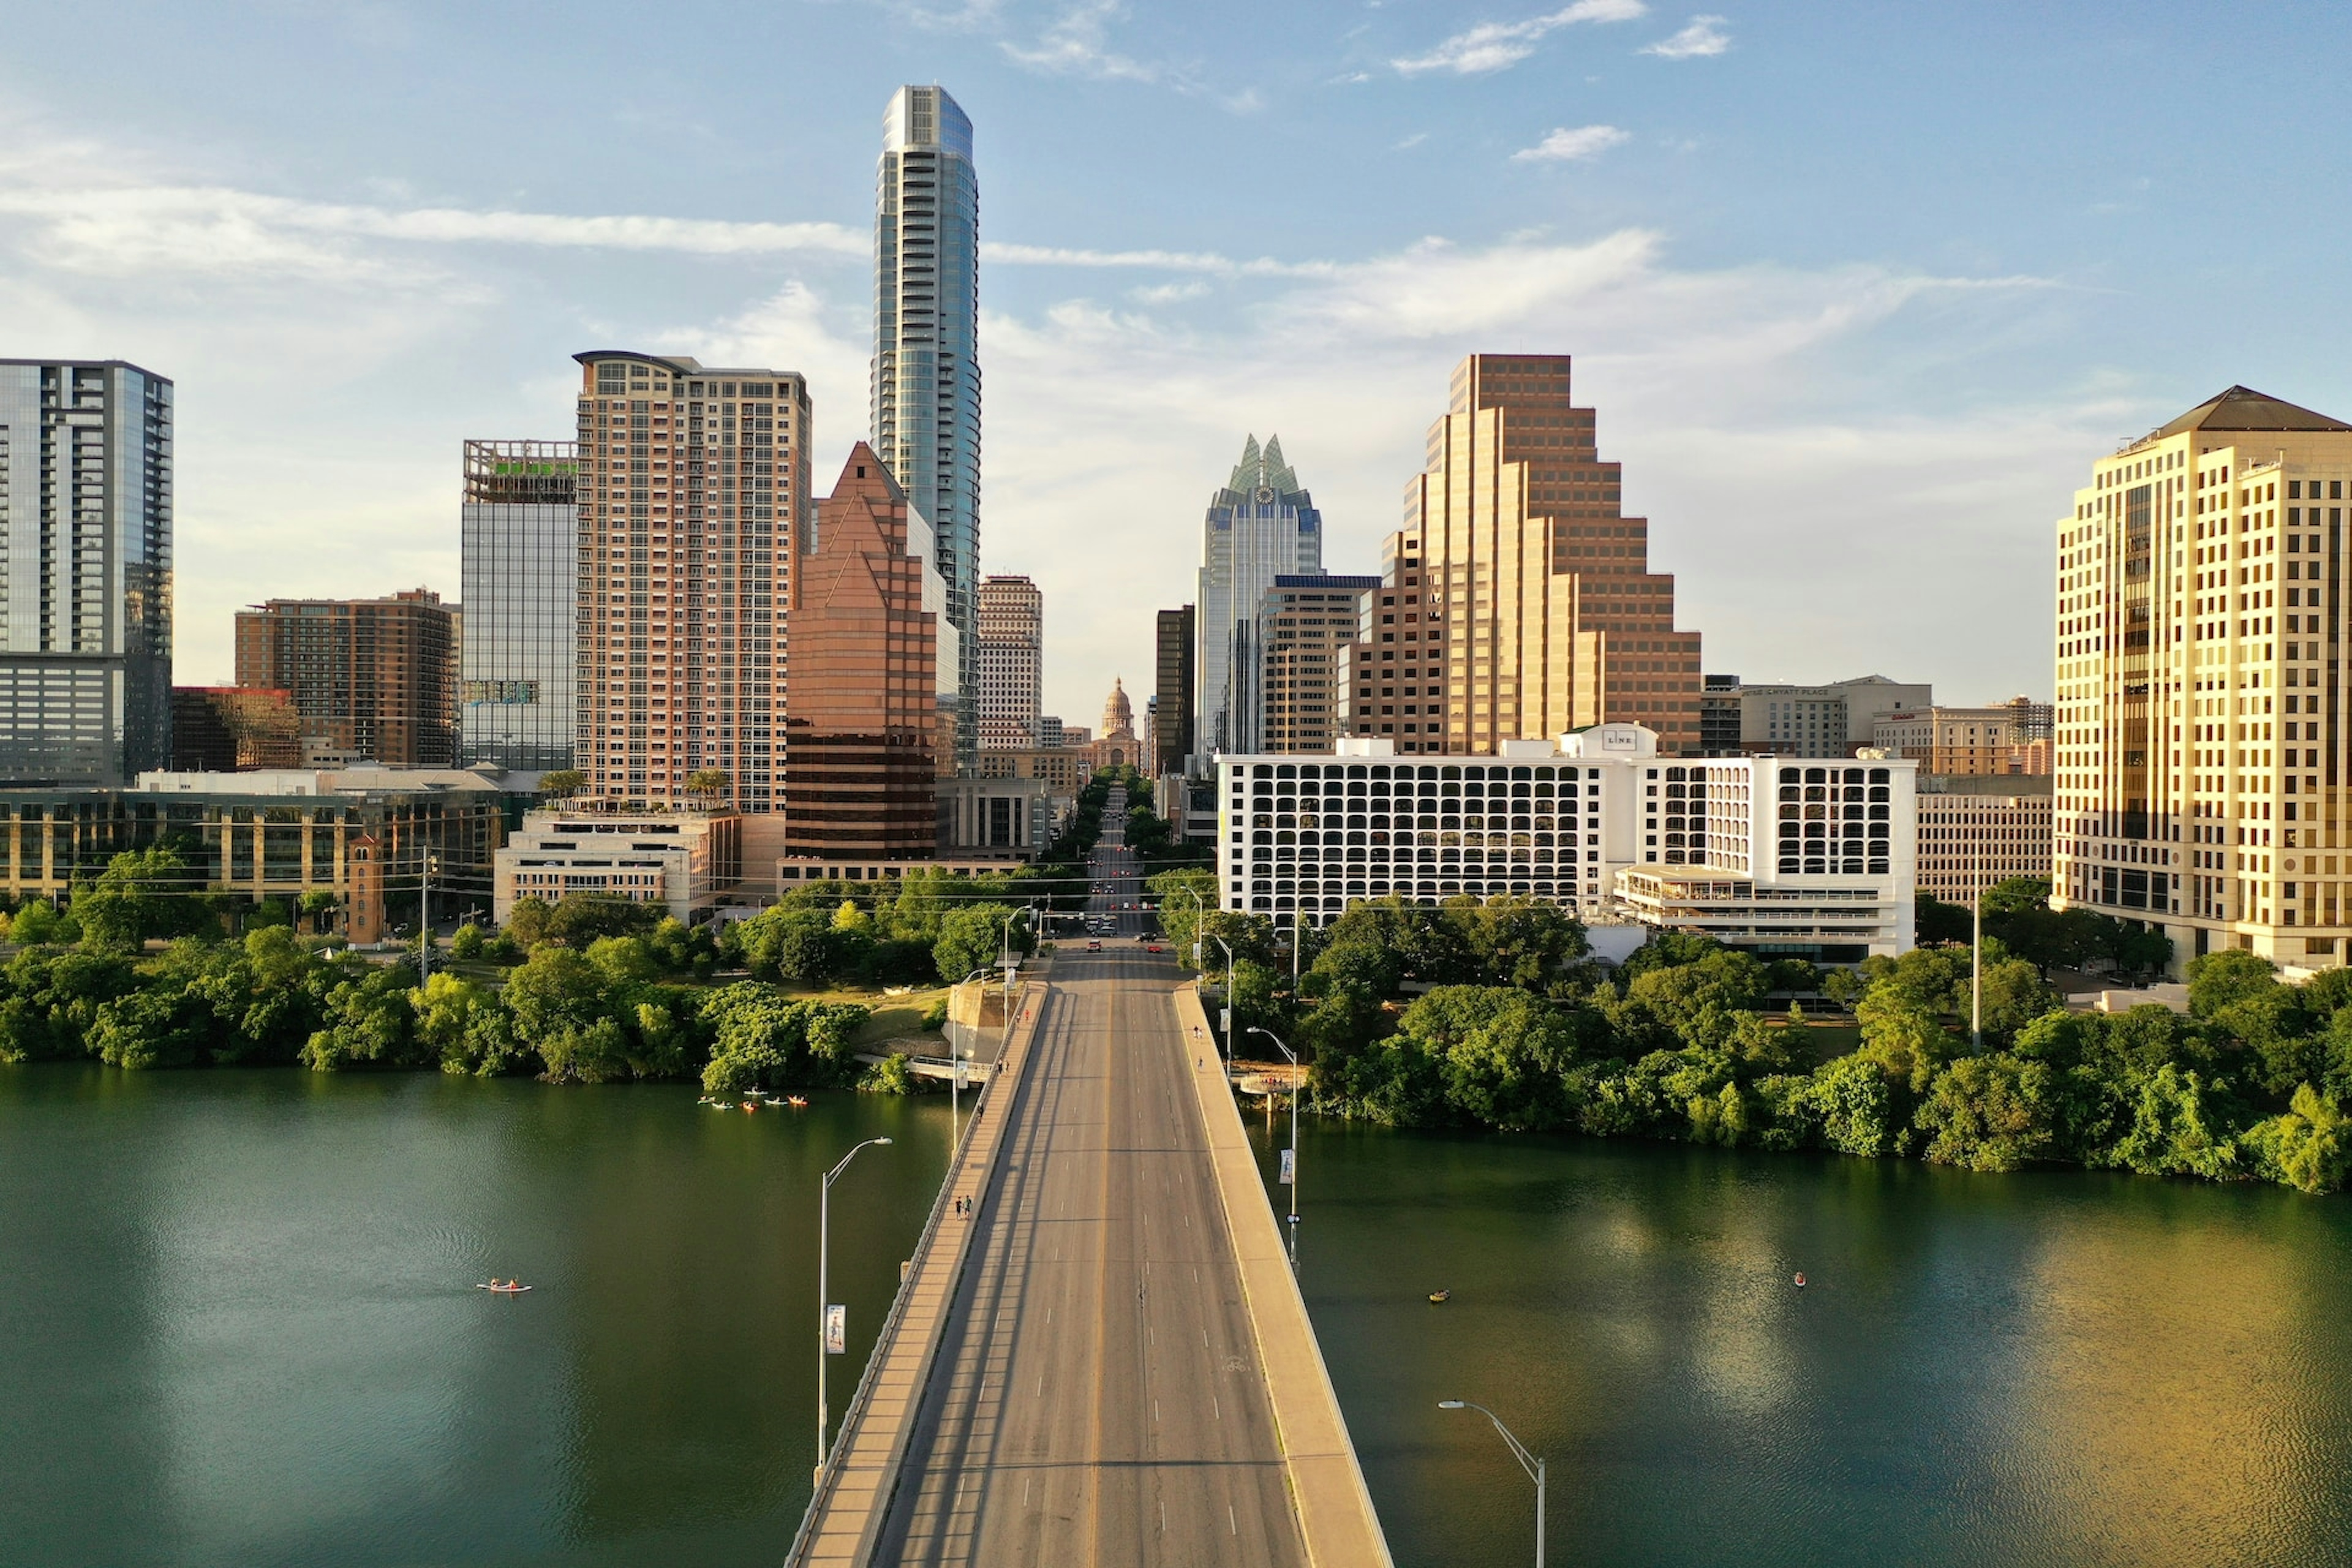 An aerial photograph of Austin, Texas